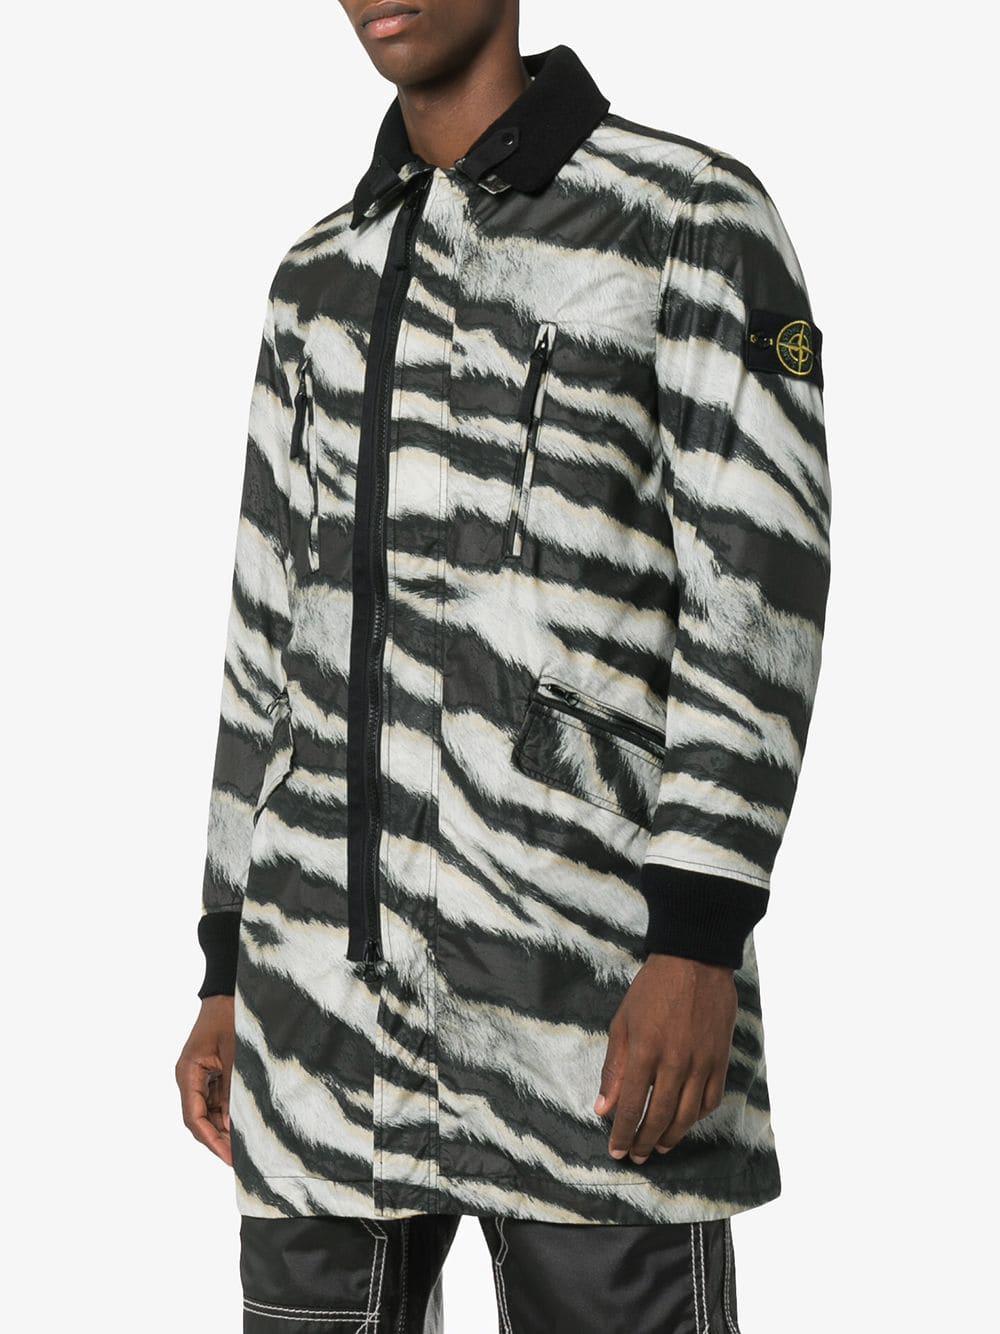 Stone Island Logo Detail Zebra Print Reversible Wool Blend Jacket in Black  for Men | Lyst